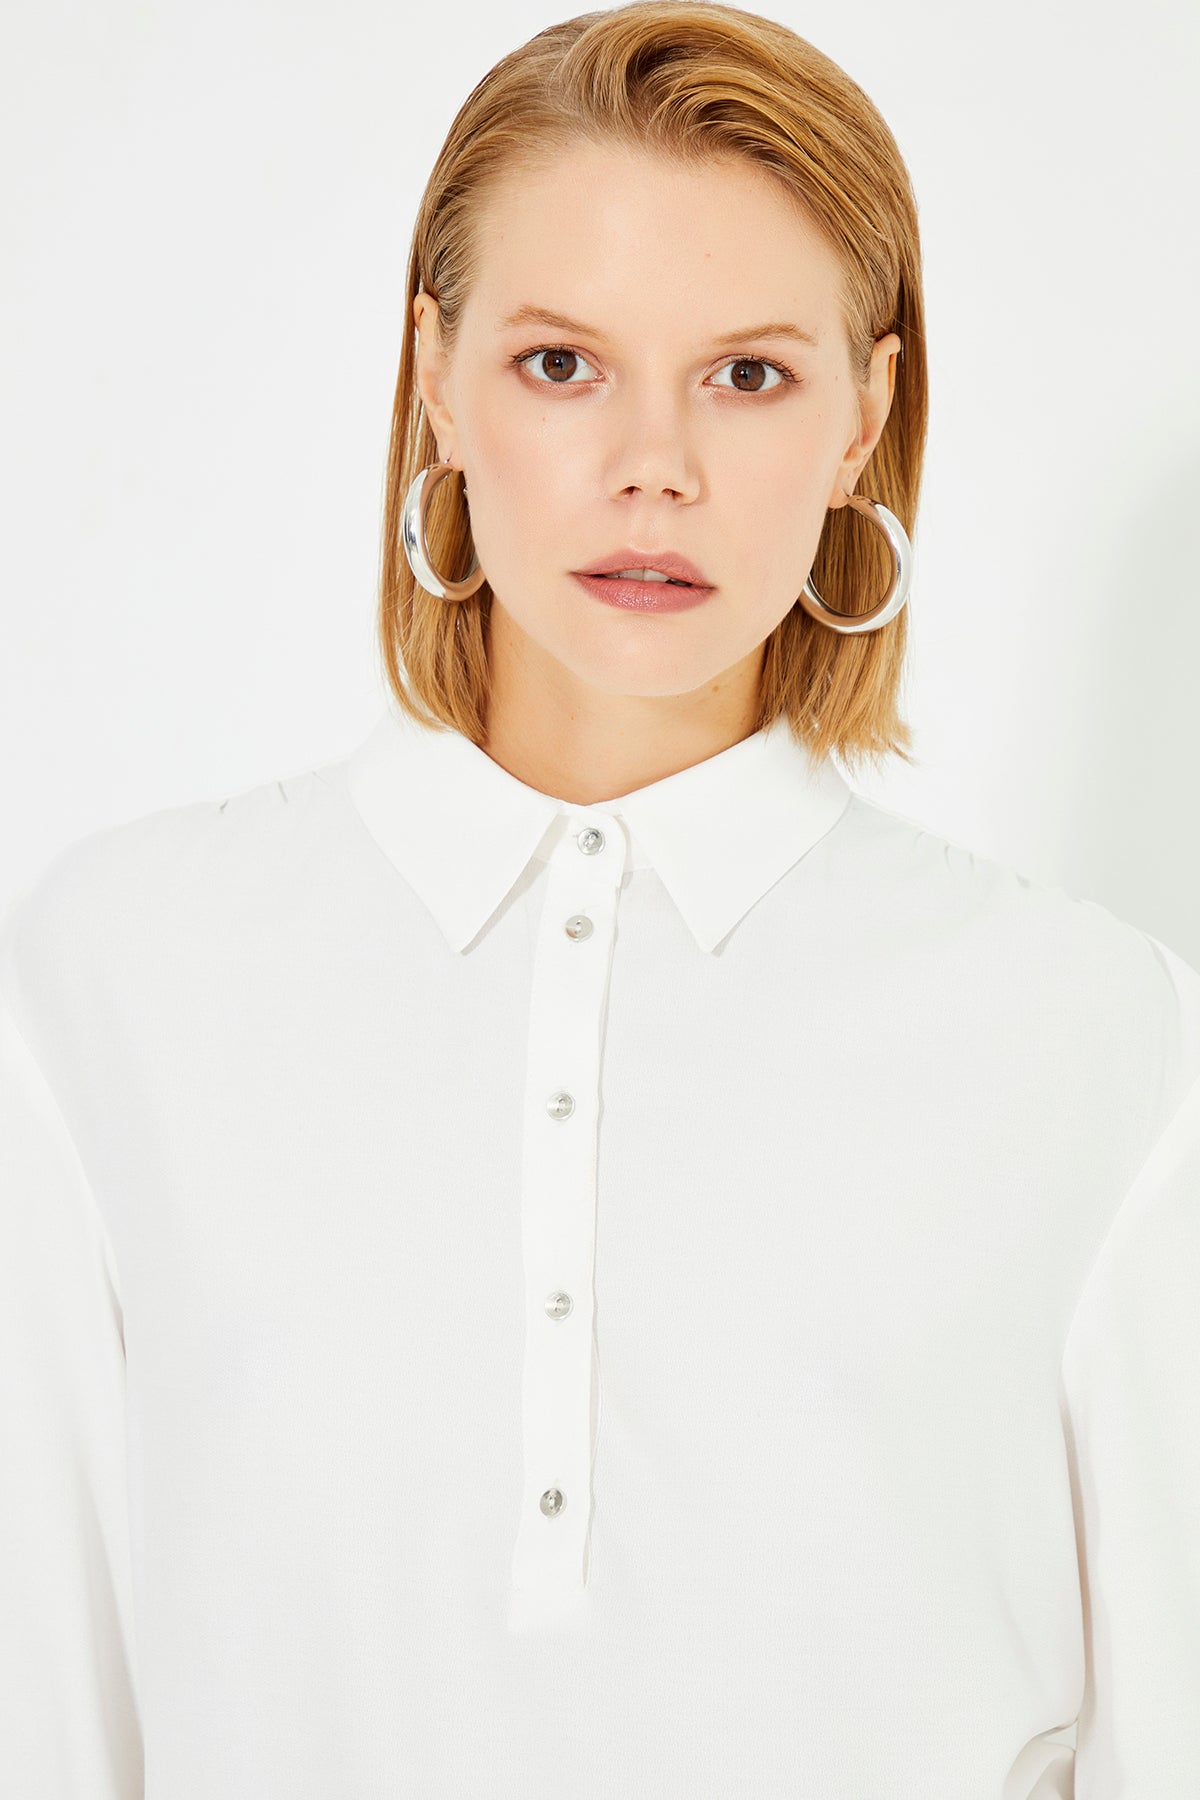 White Wide Cuff Button Front Women's Shirt